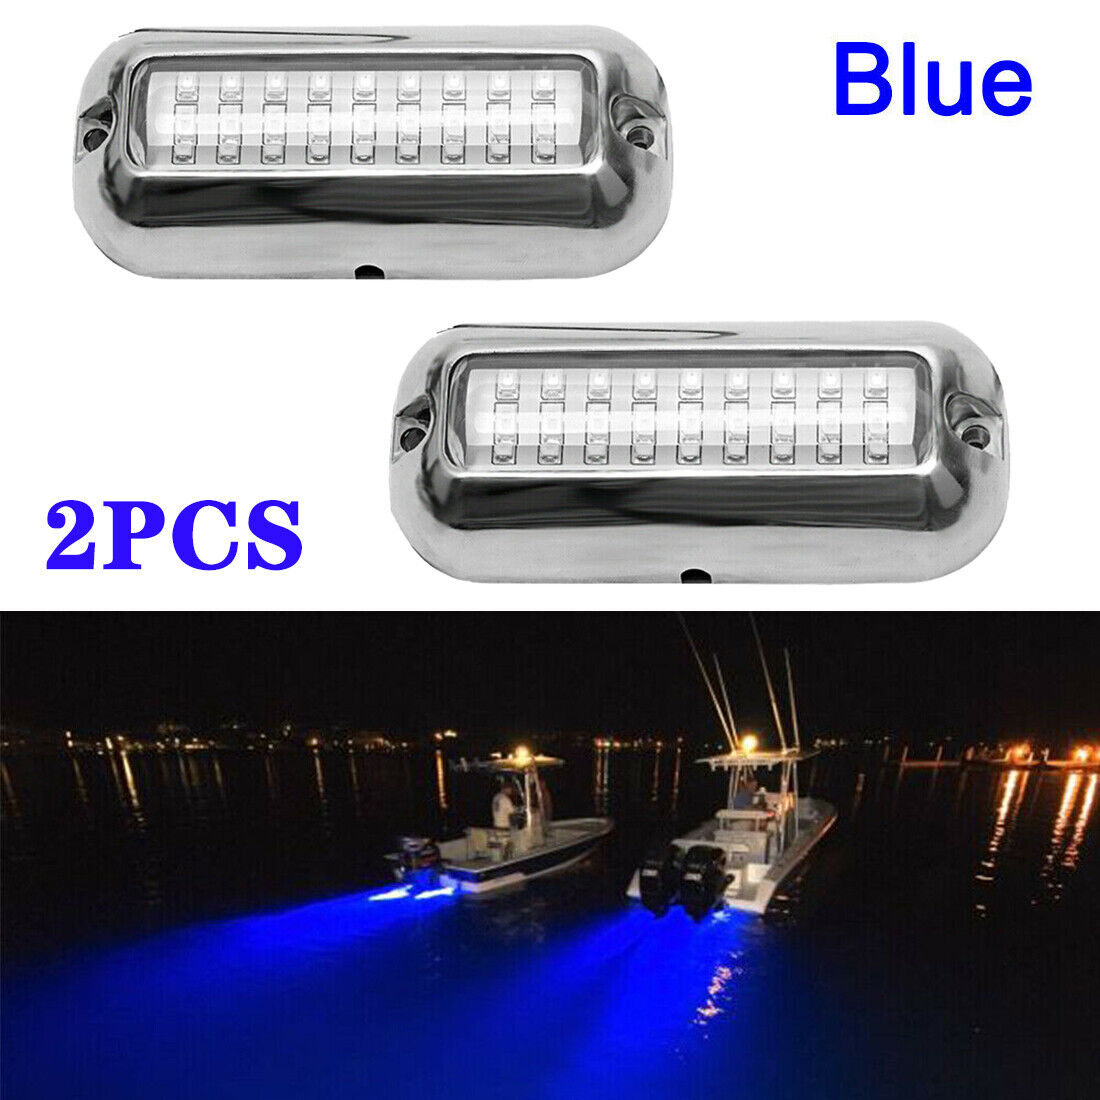 2 x BLUE 27LED  Underwater BOAT MARINE Transom LIGHT 316 Stainless Steel Pontoon